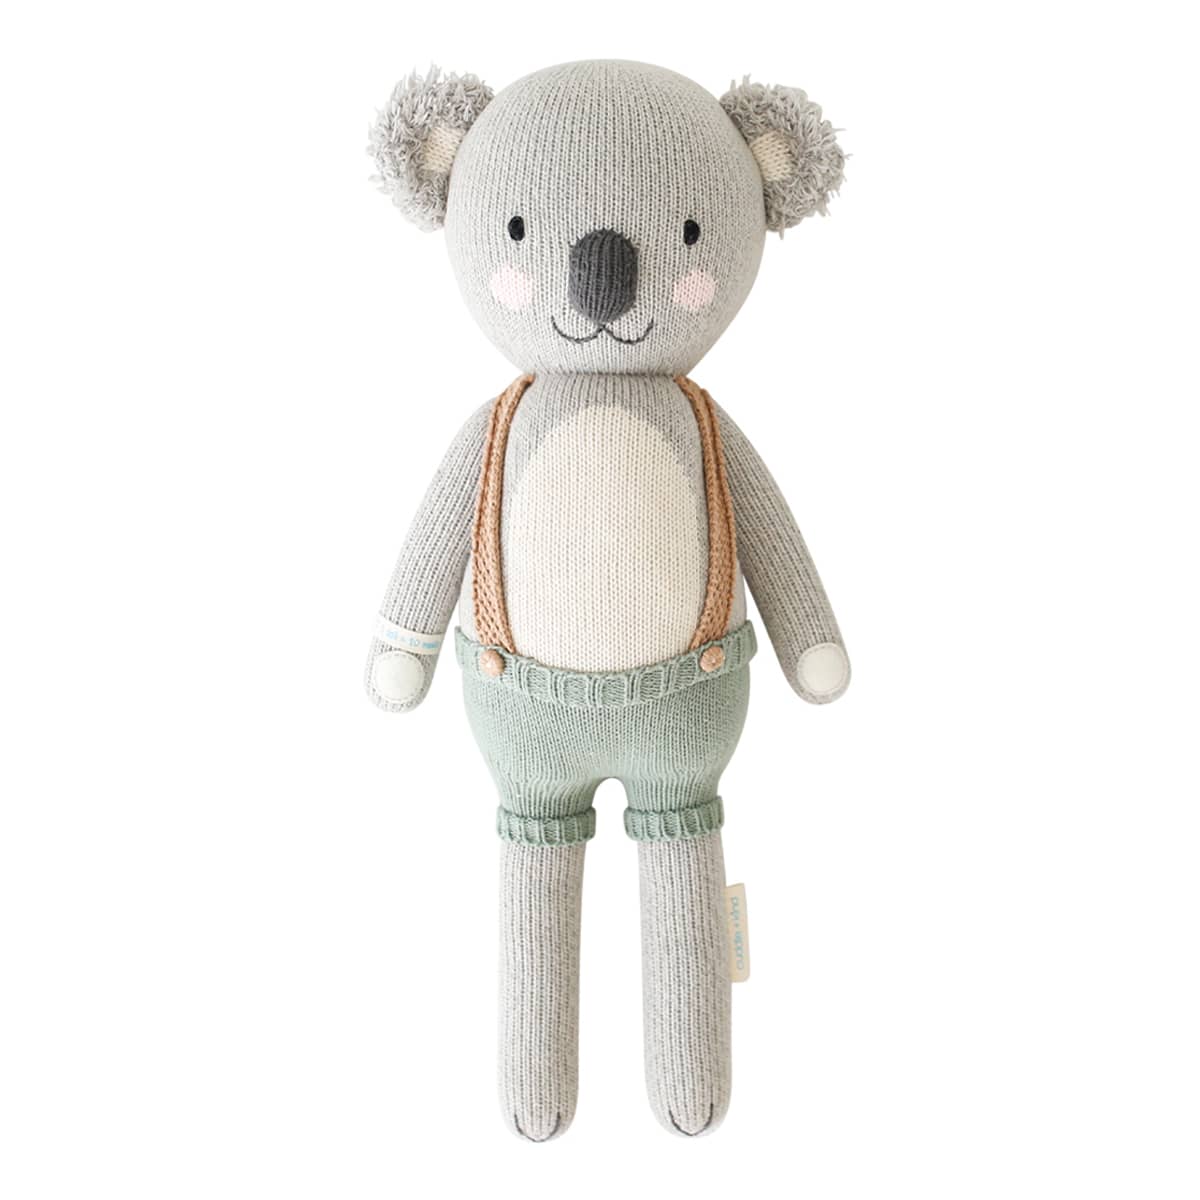 Cuddle + Kind Hand-Knit Doll - Quinn the Koala